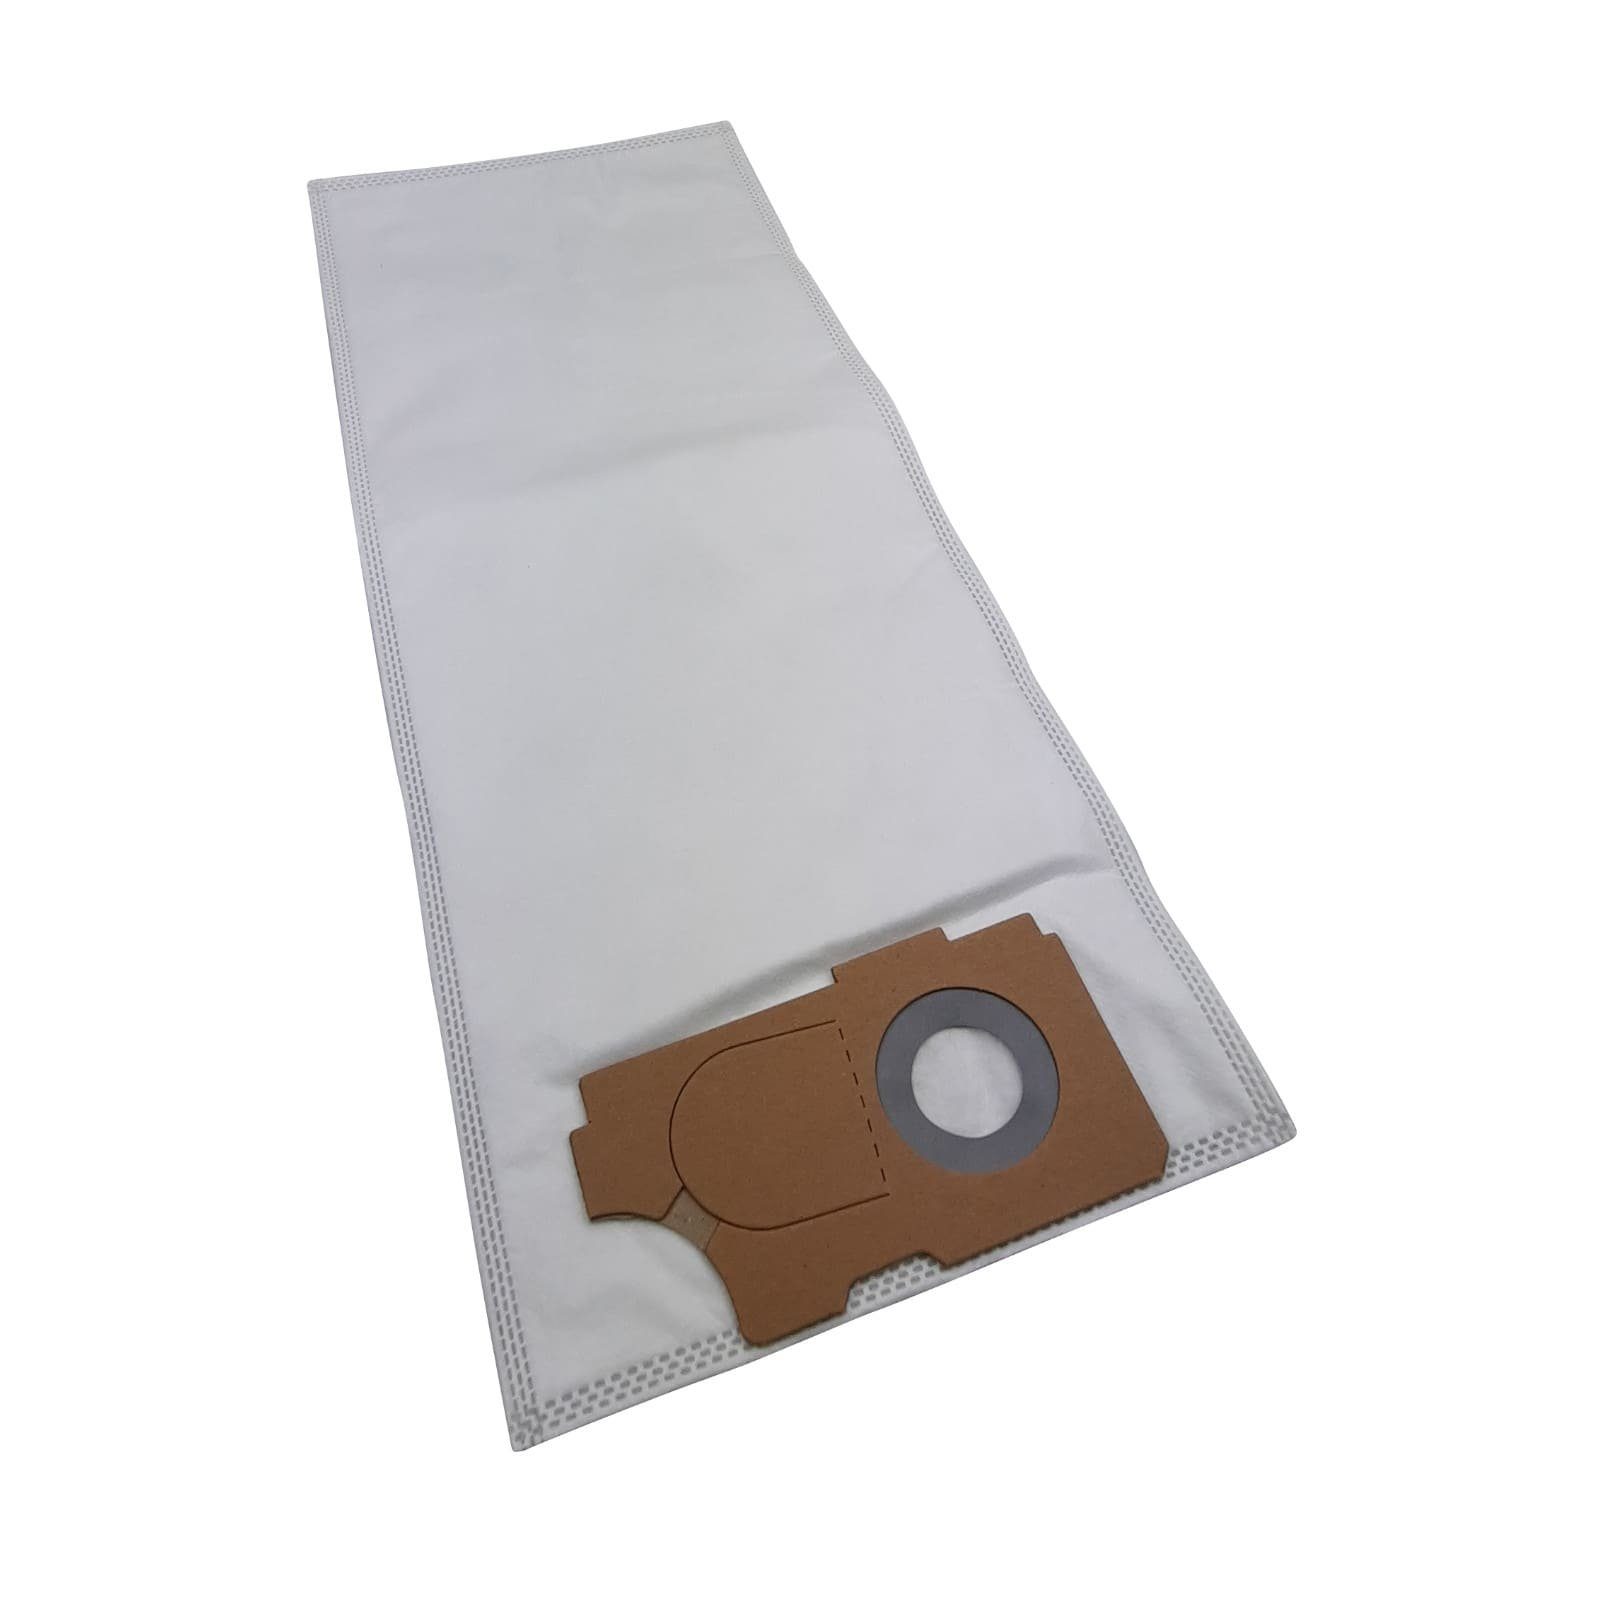 Reinica Staubsaugerbeutel passend für Clean a la Card Comfort 46, 10er-Pack Staubbeutel Saugerbeutel Beutel Filtertüten